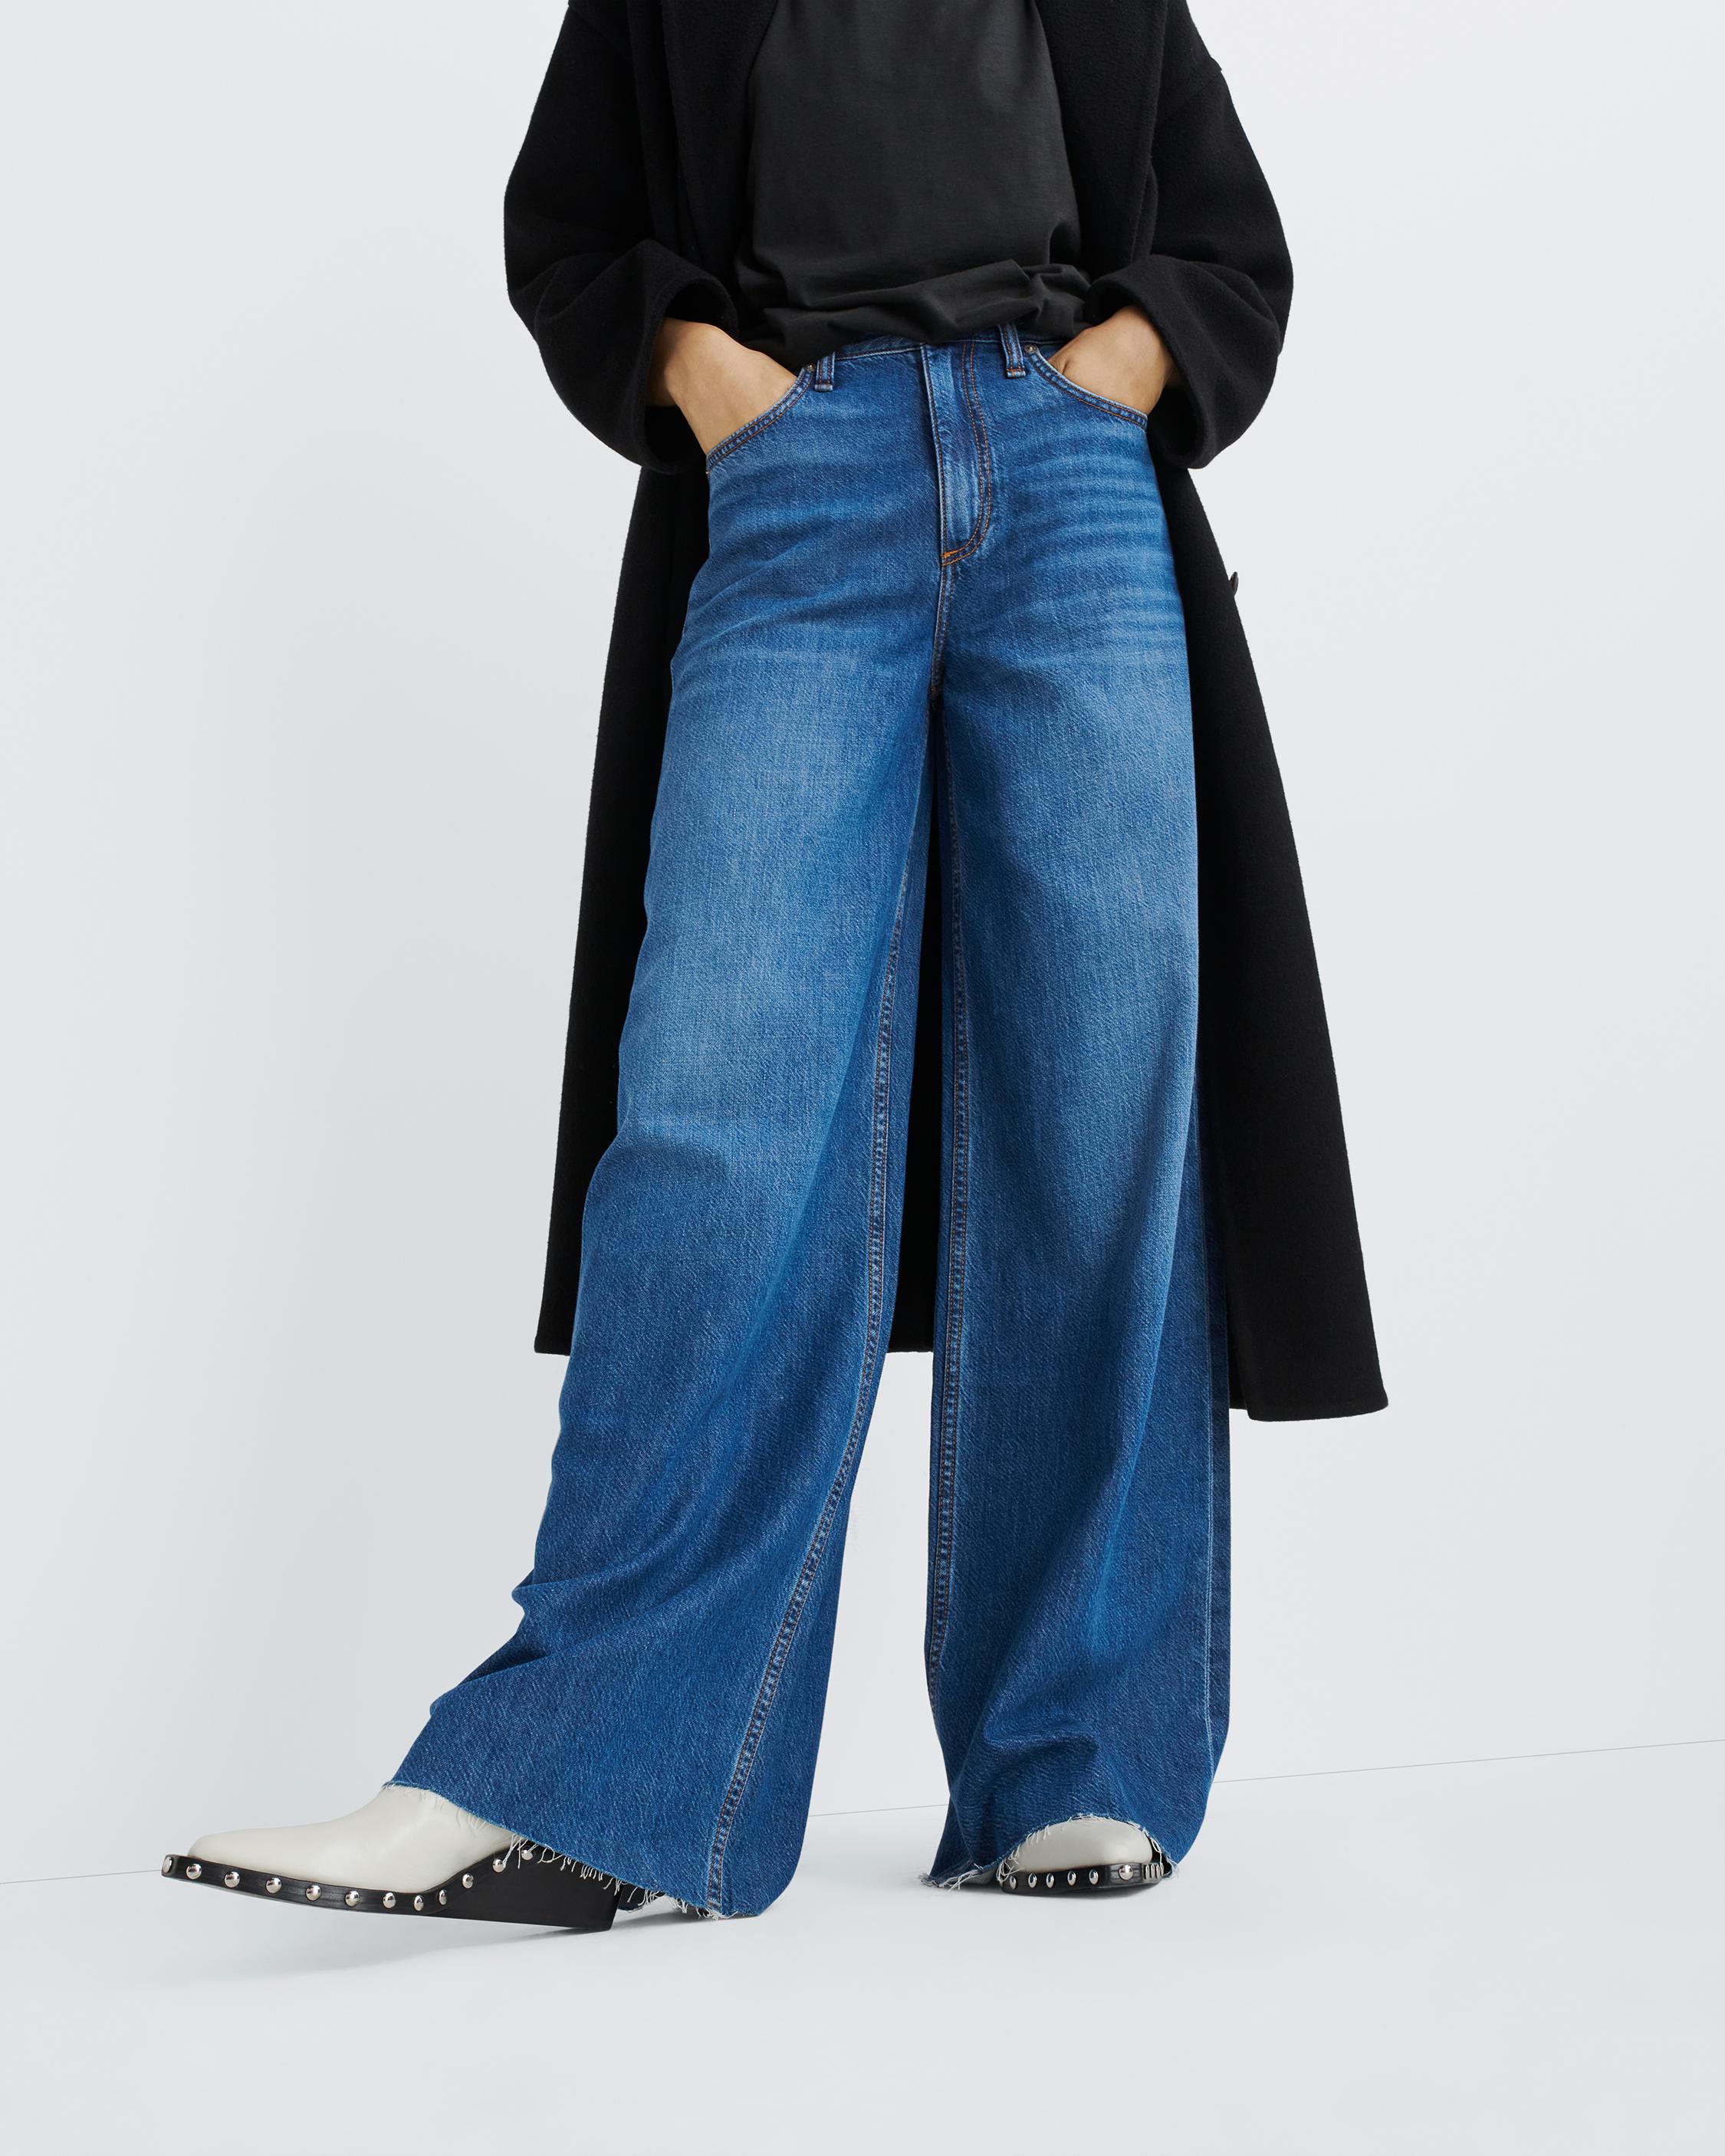 Off-White c/o Virgil Abloh 2020 Wide Leg Jeans w/ Tags - Blue, 8.75 Rise  Jeans, Clothing - WOWVA53269